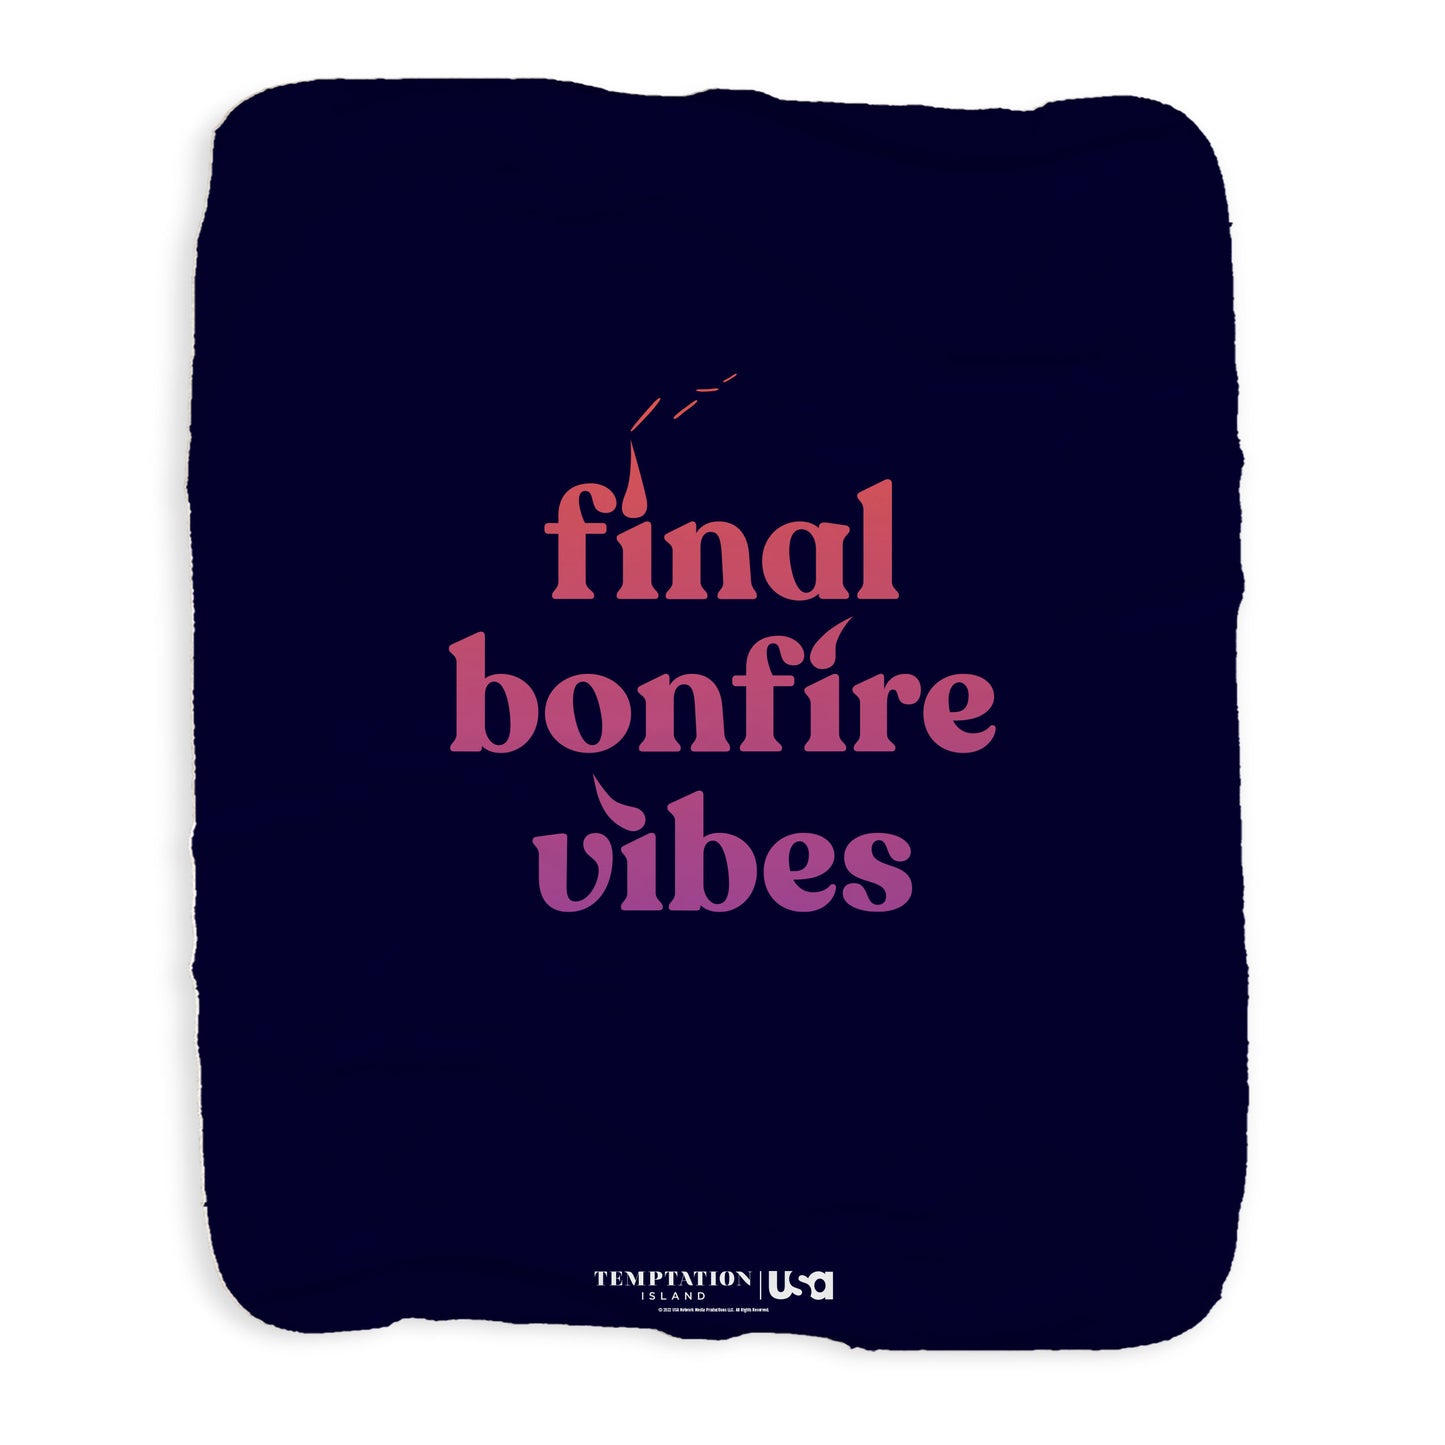 Temptation Island Final Bonfire Vibes Sherpa Blanket